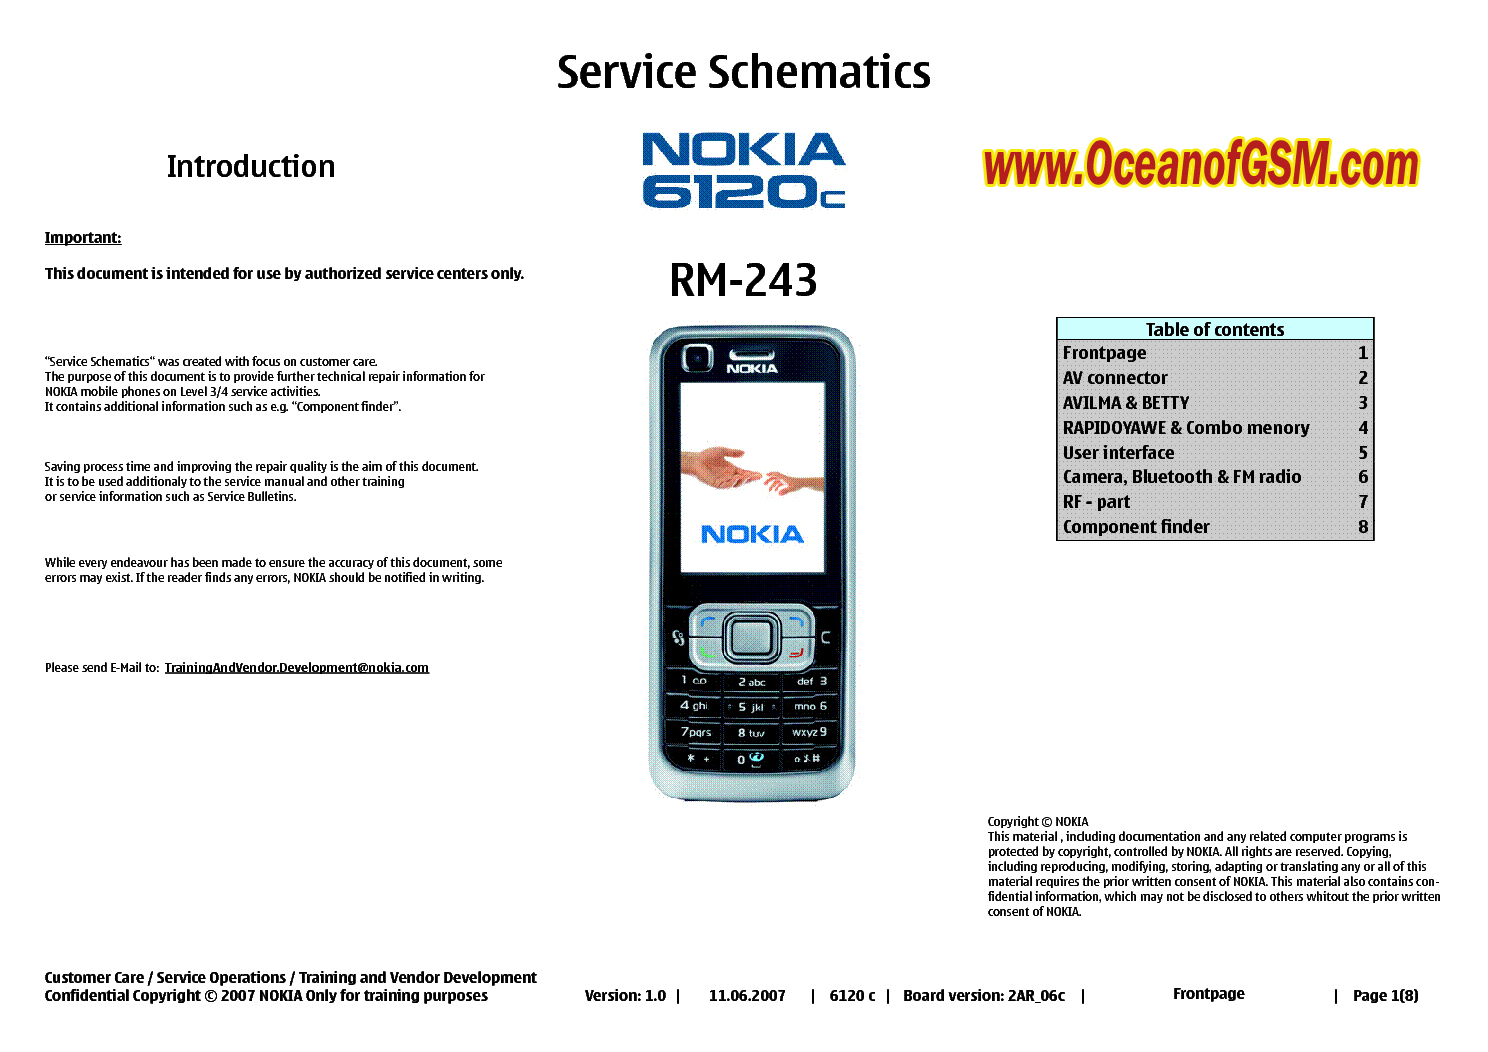 Nokia 6120c (RM-243) Latest Version With Arabic And Urdu Flash file (OceanofGSM.com)